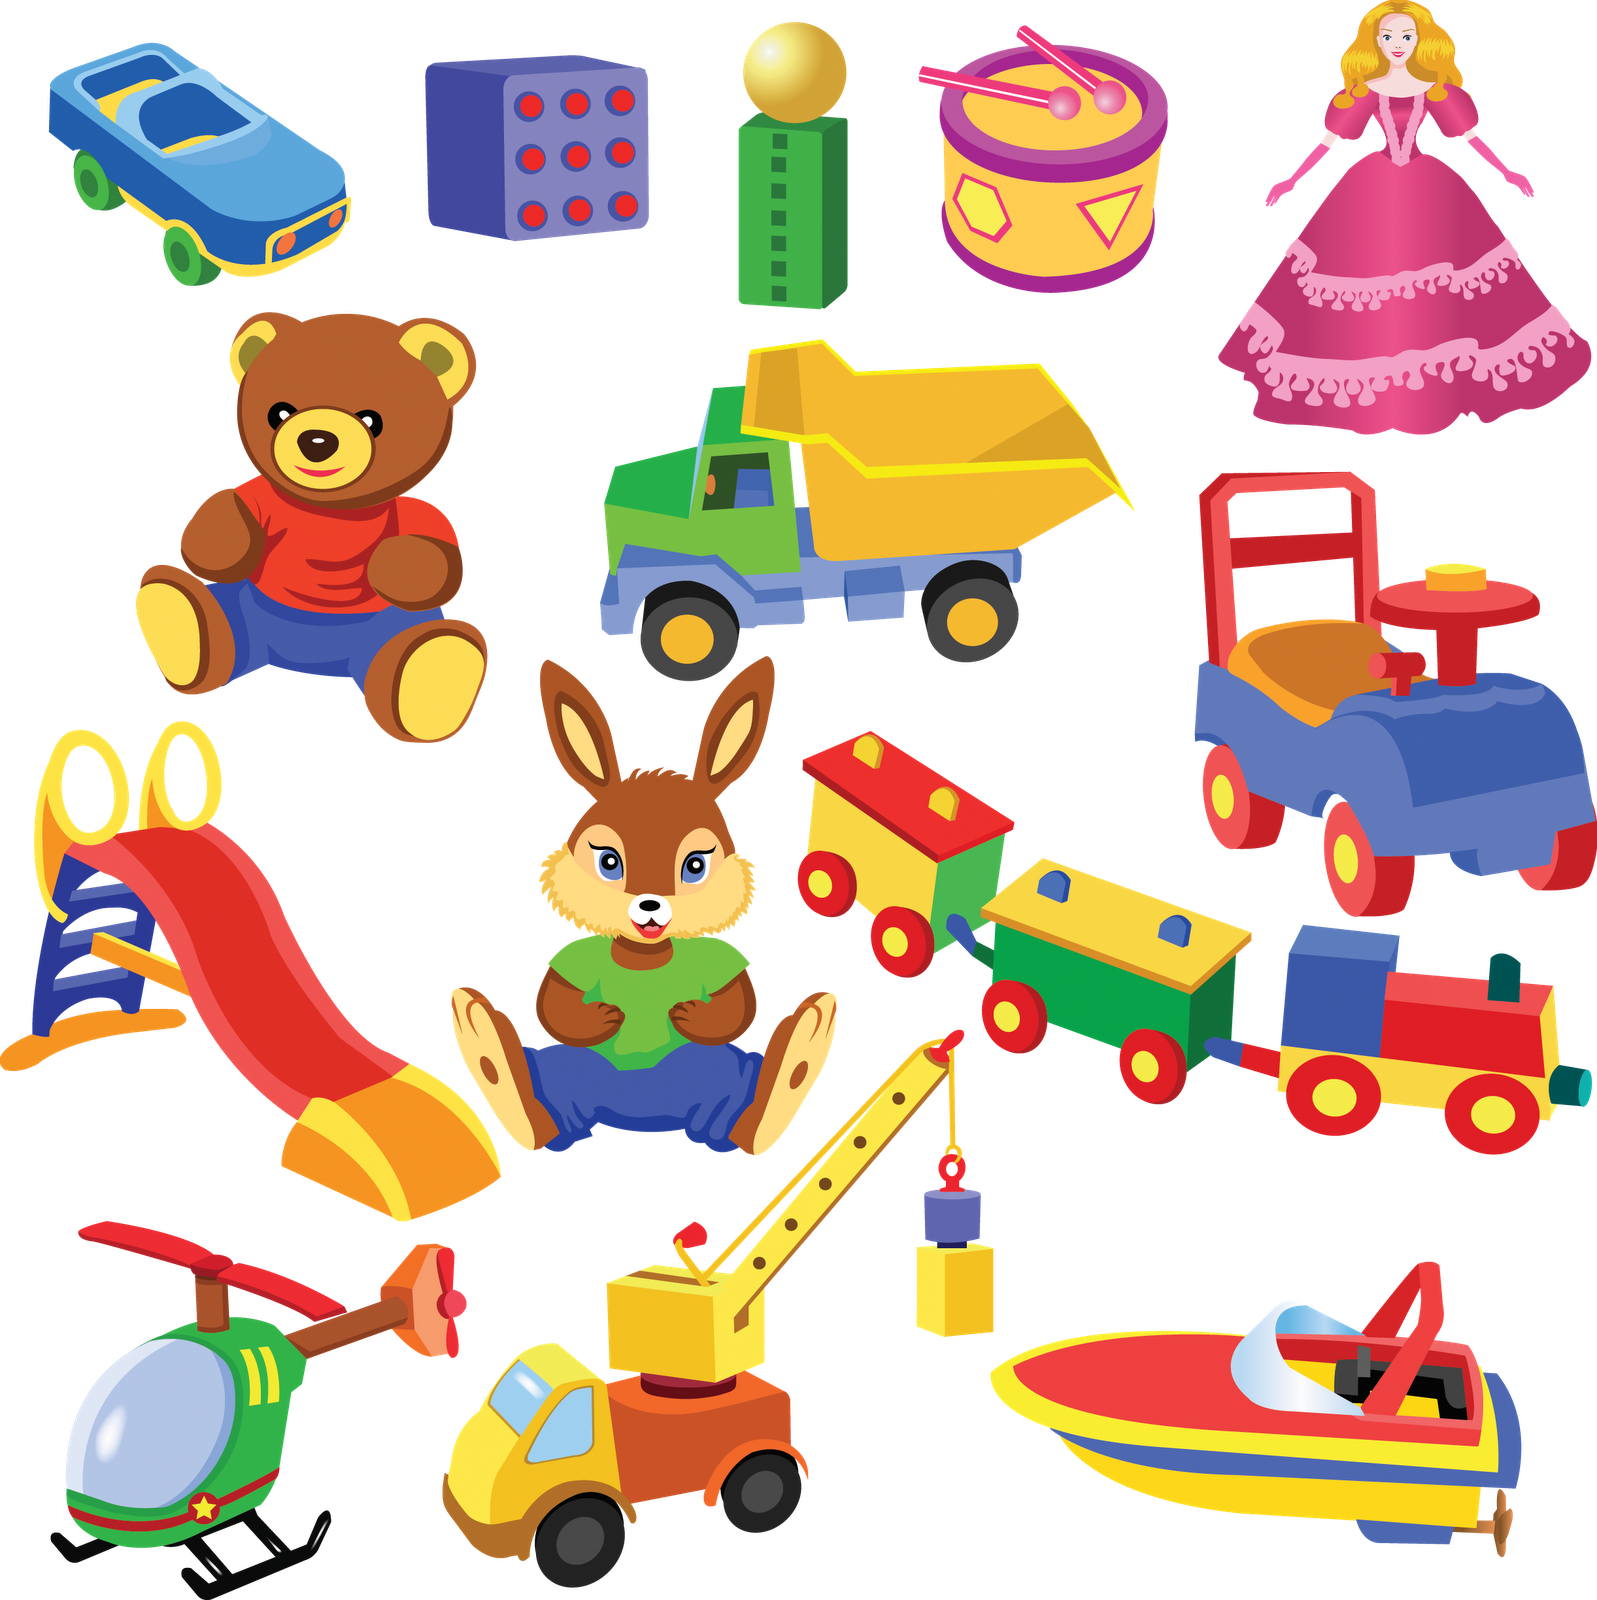 Toy картинка. Детские игрушки. Много игрушек для детей. Игрушки для детского сада. Детский игрушка для детского сада.